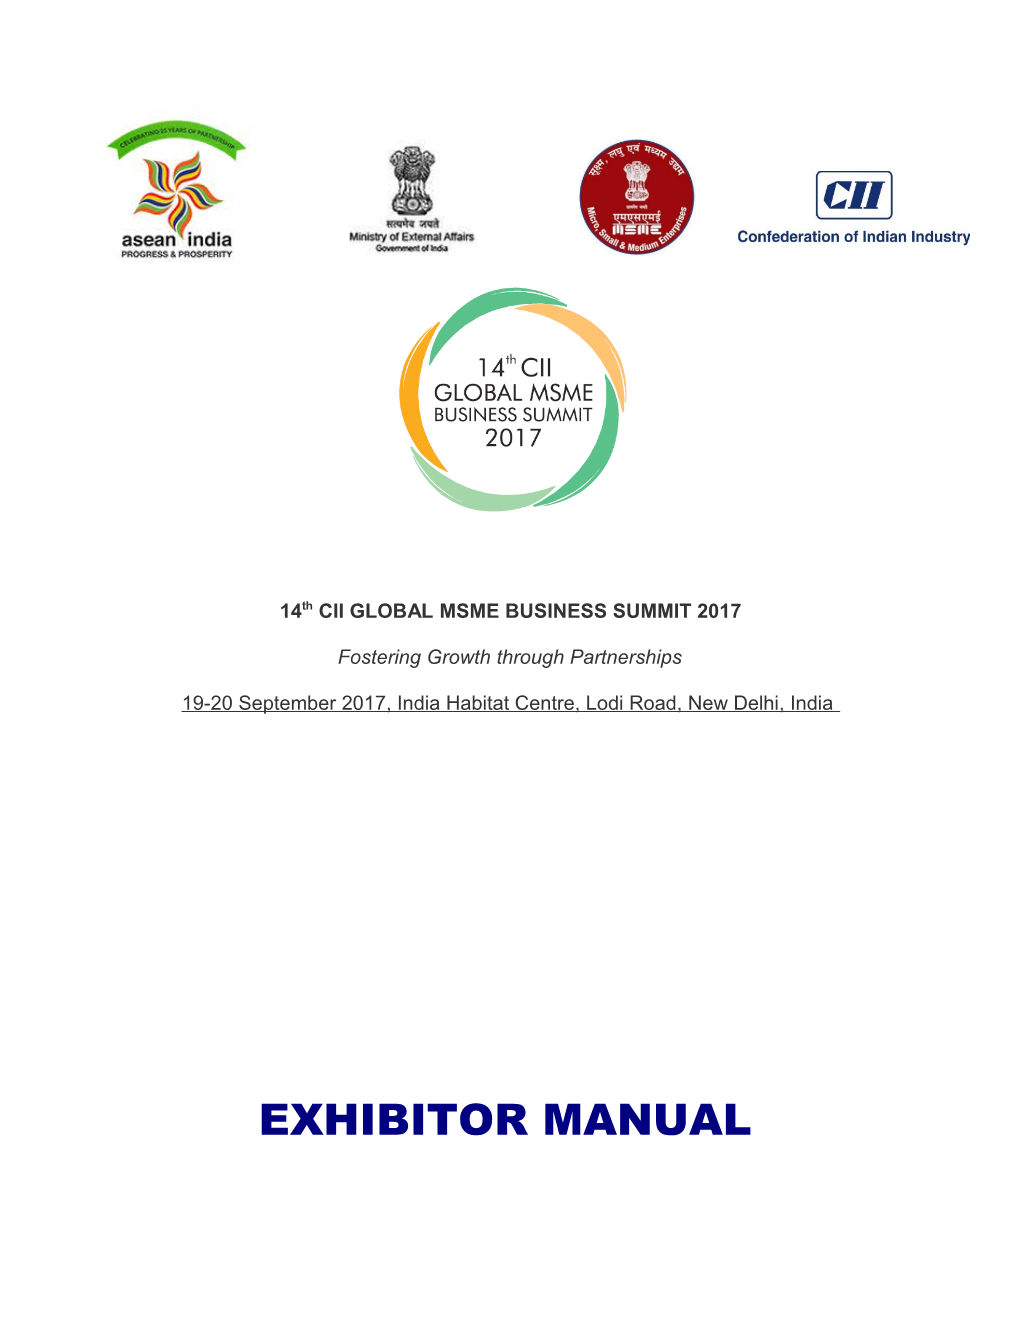 14Th CII GLOBAL MSME BUSINESS SUMMIT 2017